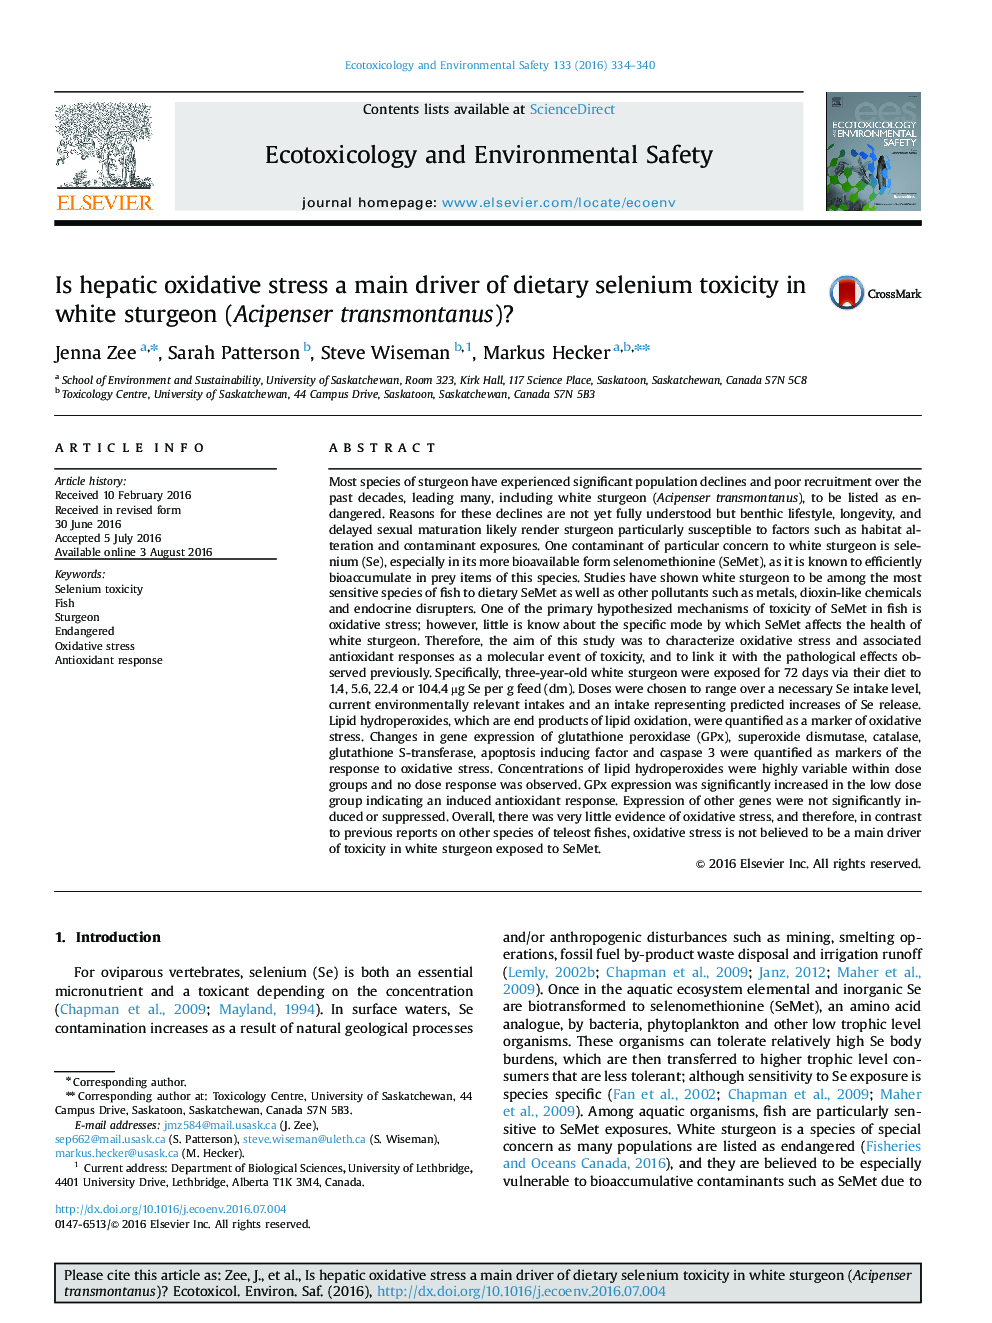 Is hepatic oxidative stress a main driver of dietary selenium toxicity in white sturgeon (Acipenser transmontanus)?